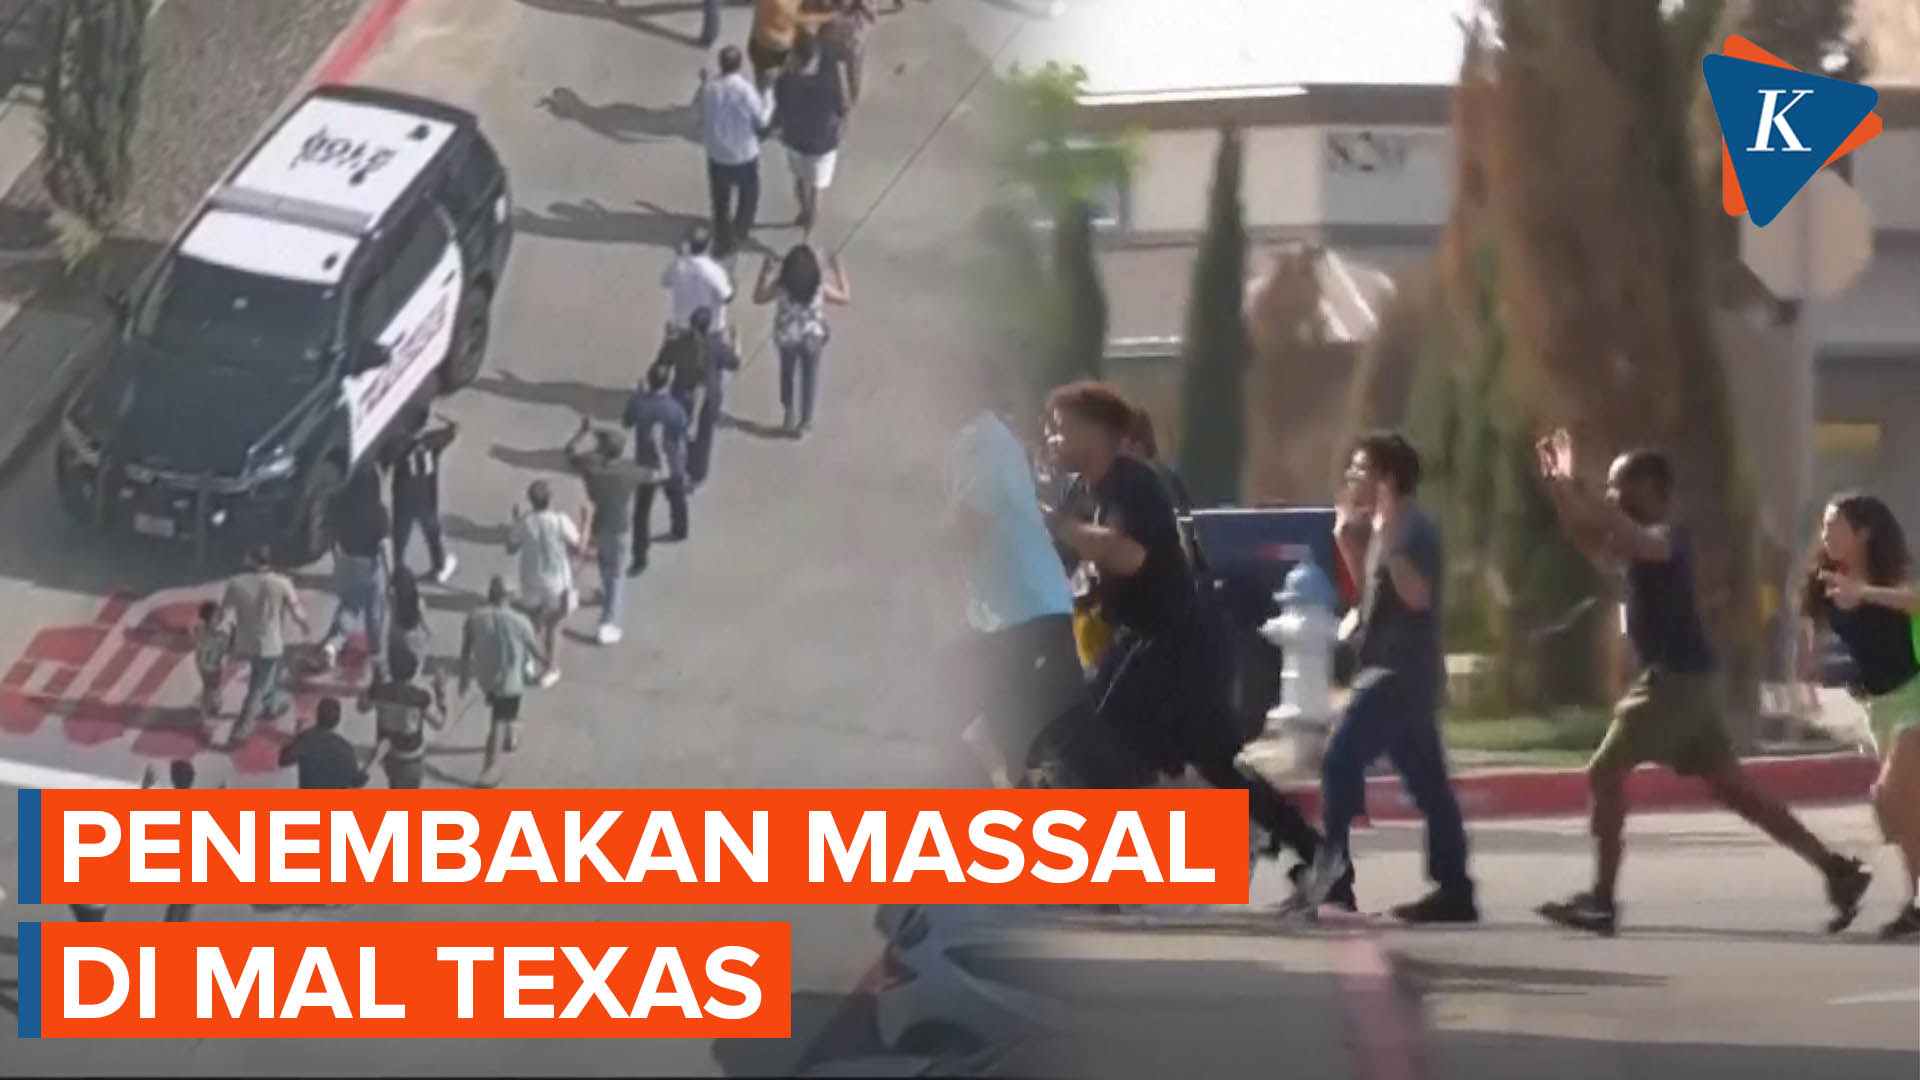 Sembilan Orang Tewas akibat Penembakan di Mal Texas, Biden Serukan Larangan Senjata Serbu